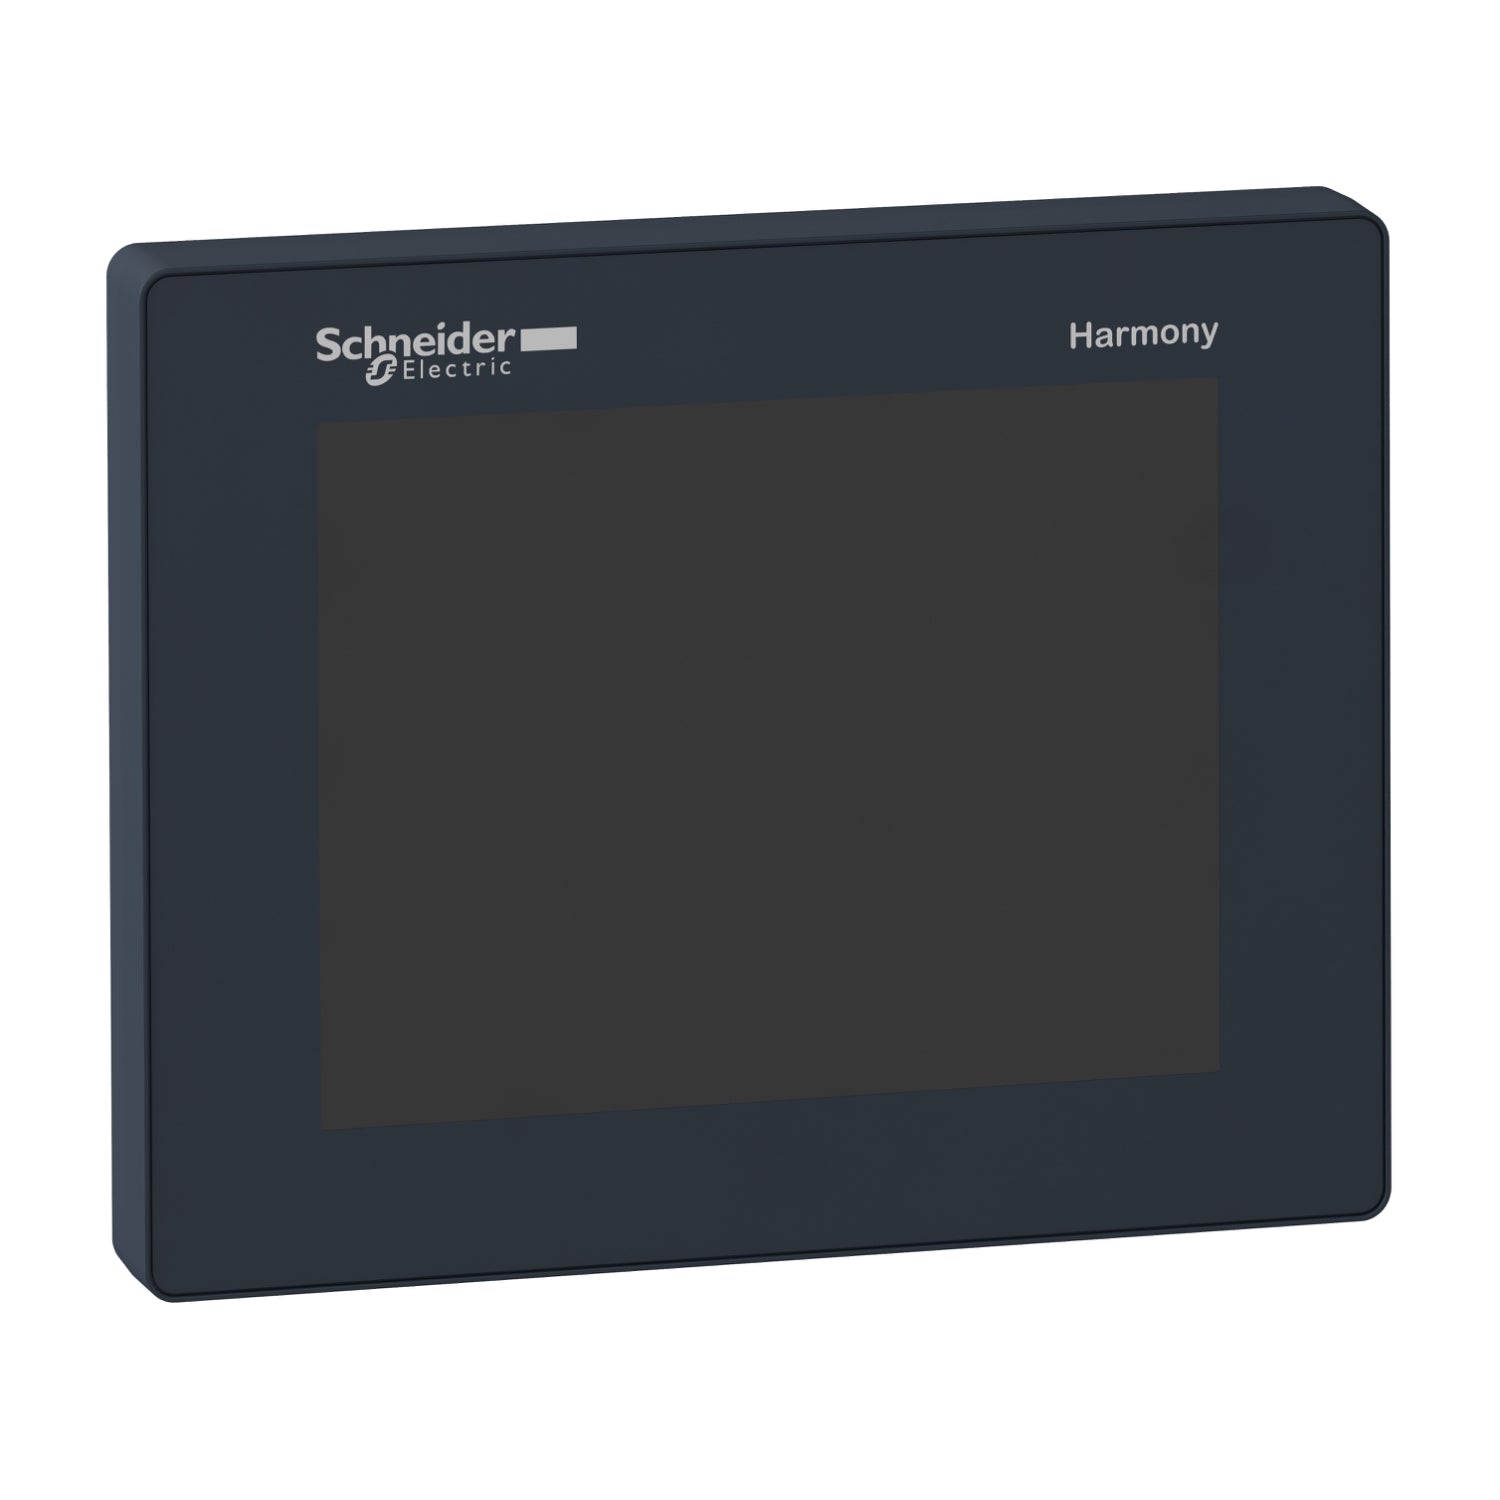 HMIS85 | Schneider Electric | Small touchscreen display HMI